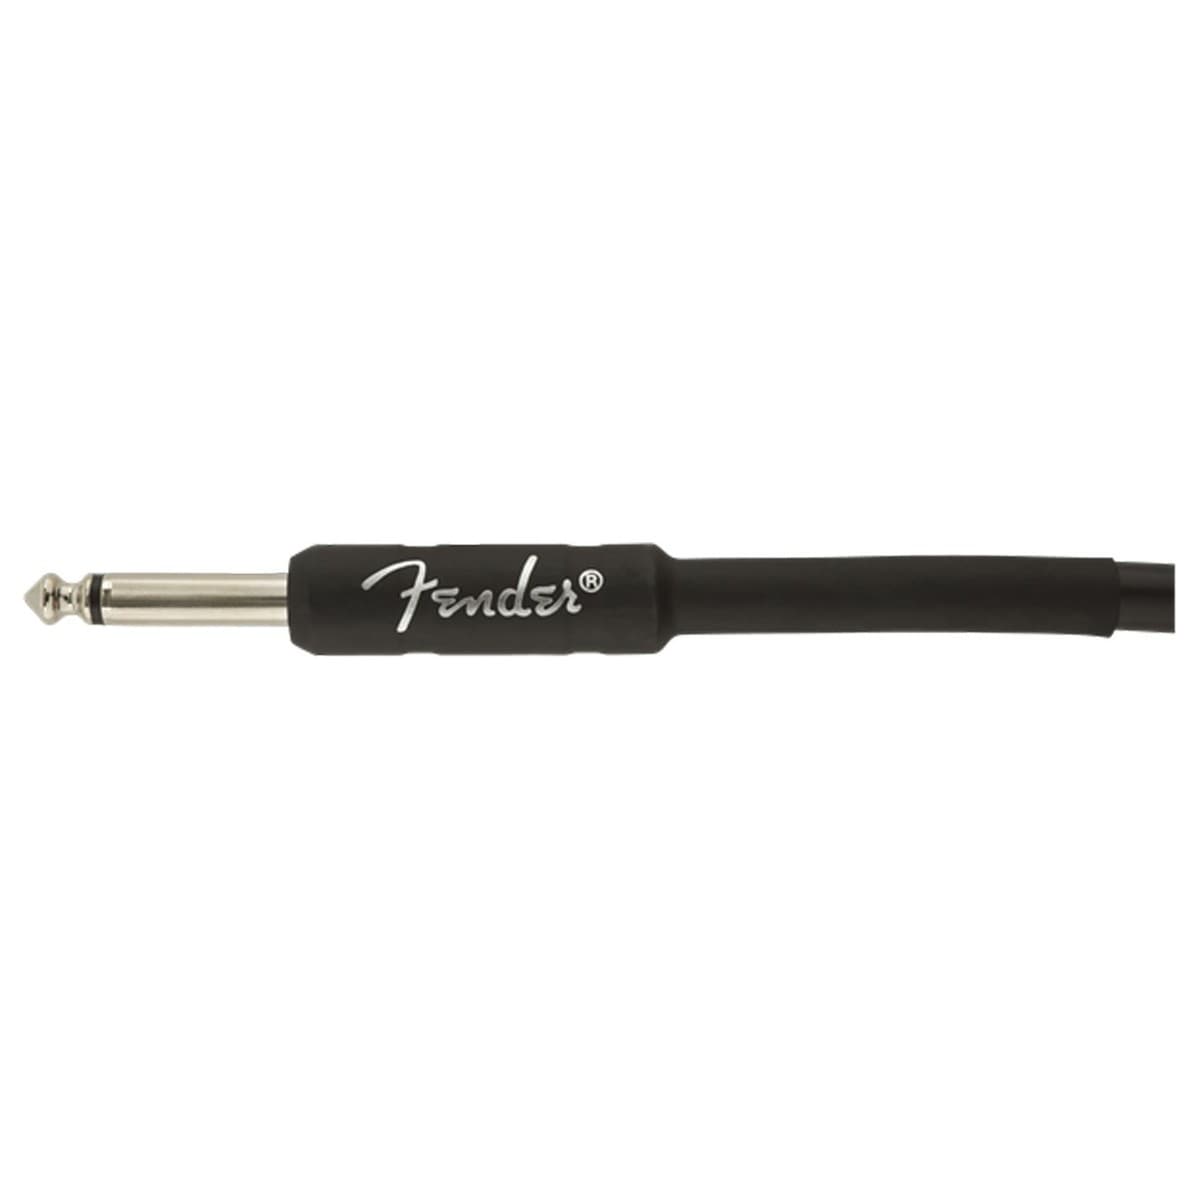 Fender Professional Series Instrument Guitar Cable - 3m 10ft - Black